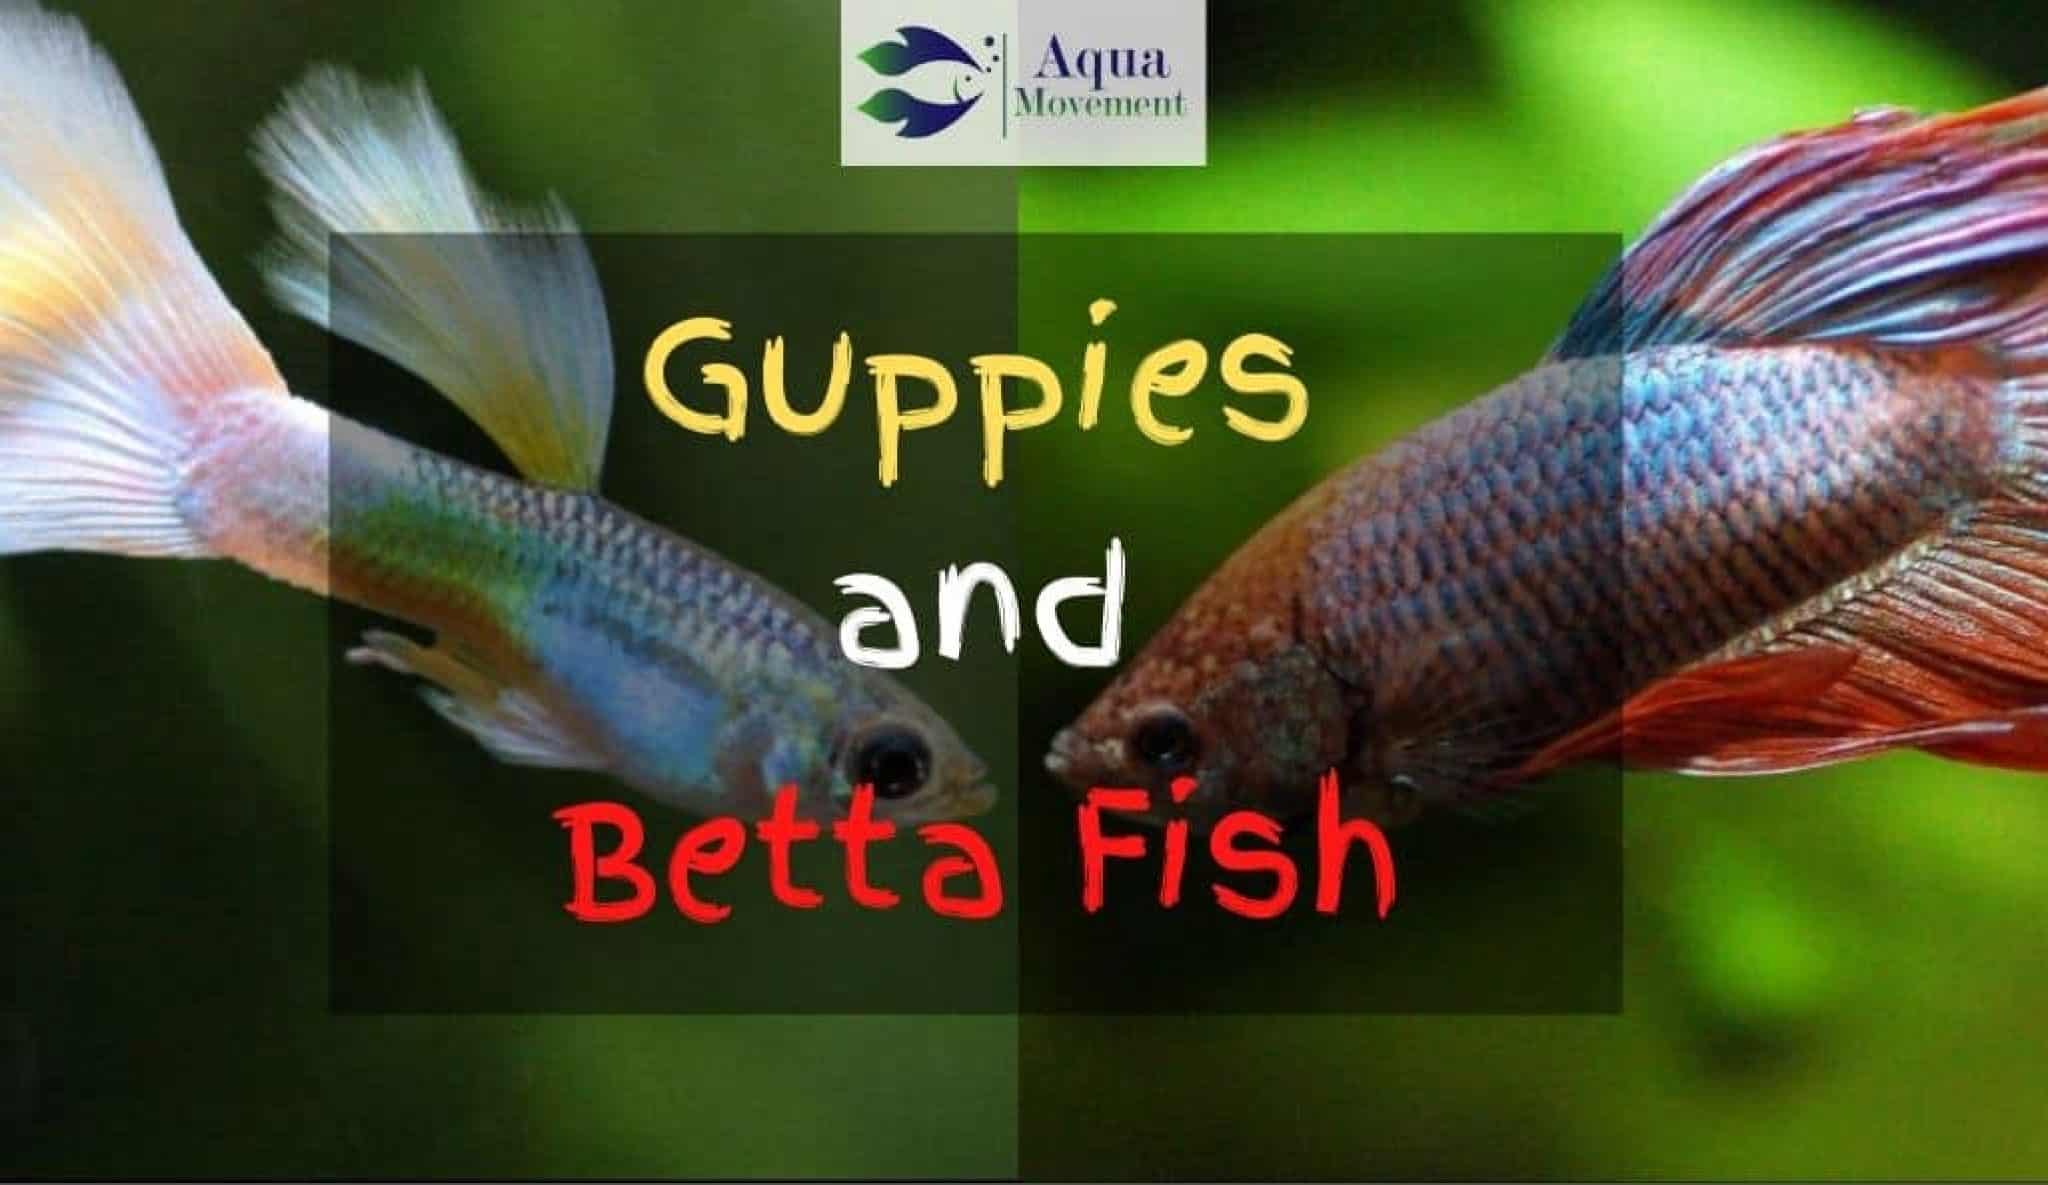 Can Guppies and Betta Fish Live Together? | Aqua Movement